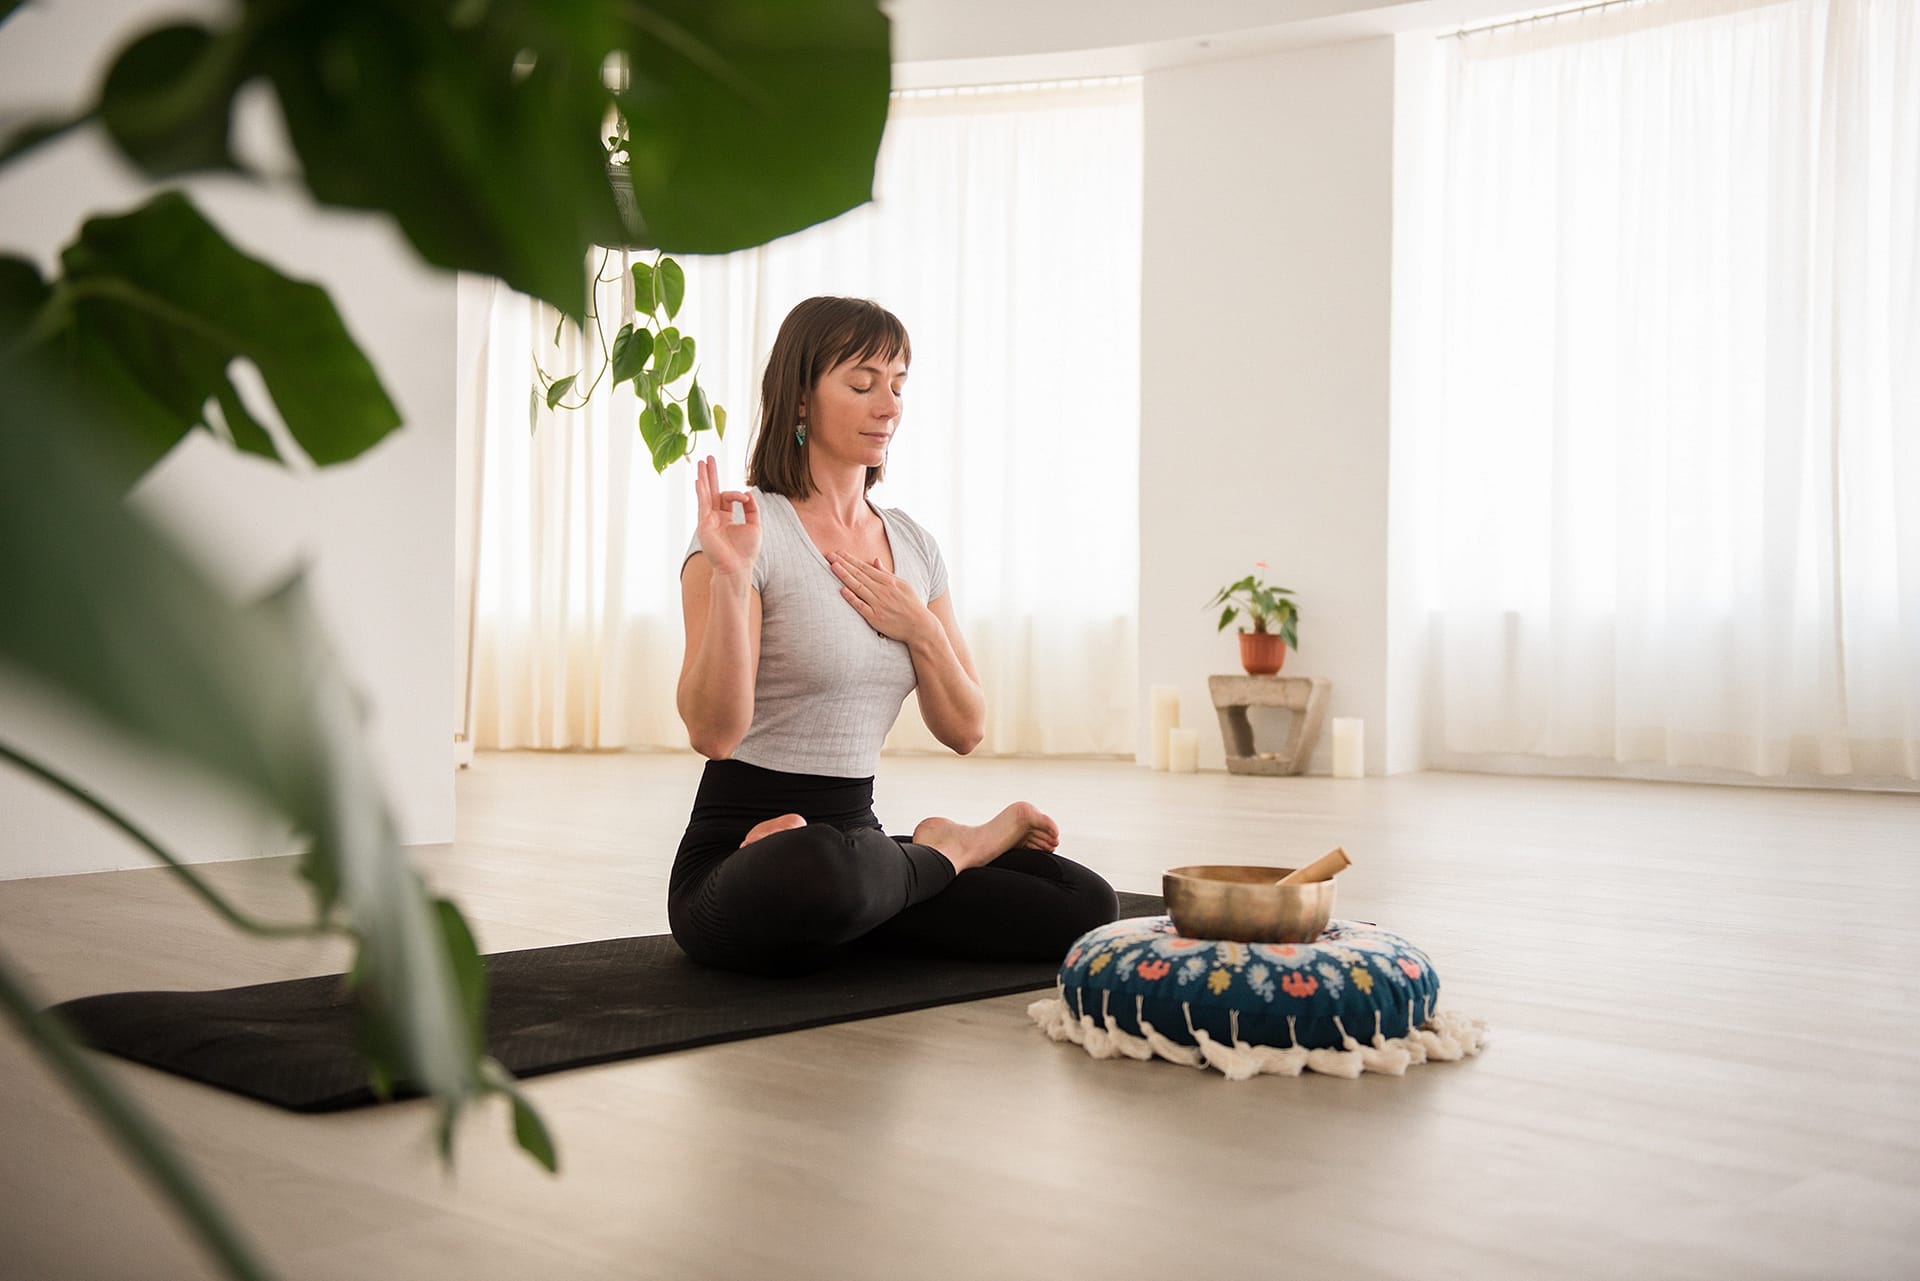 BreakAway Yoga Studio - There are many benefits of meditation